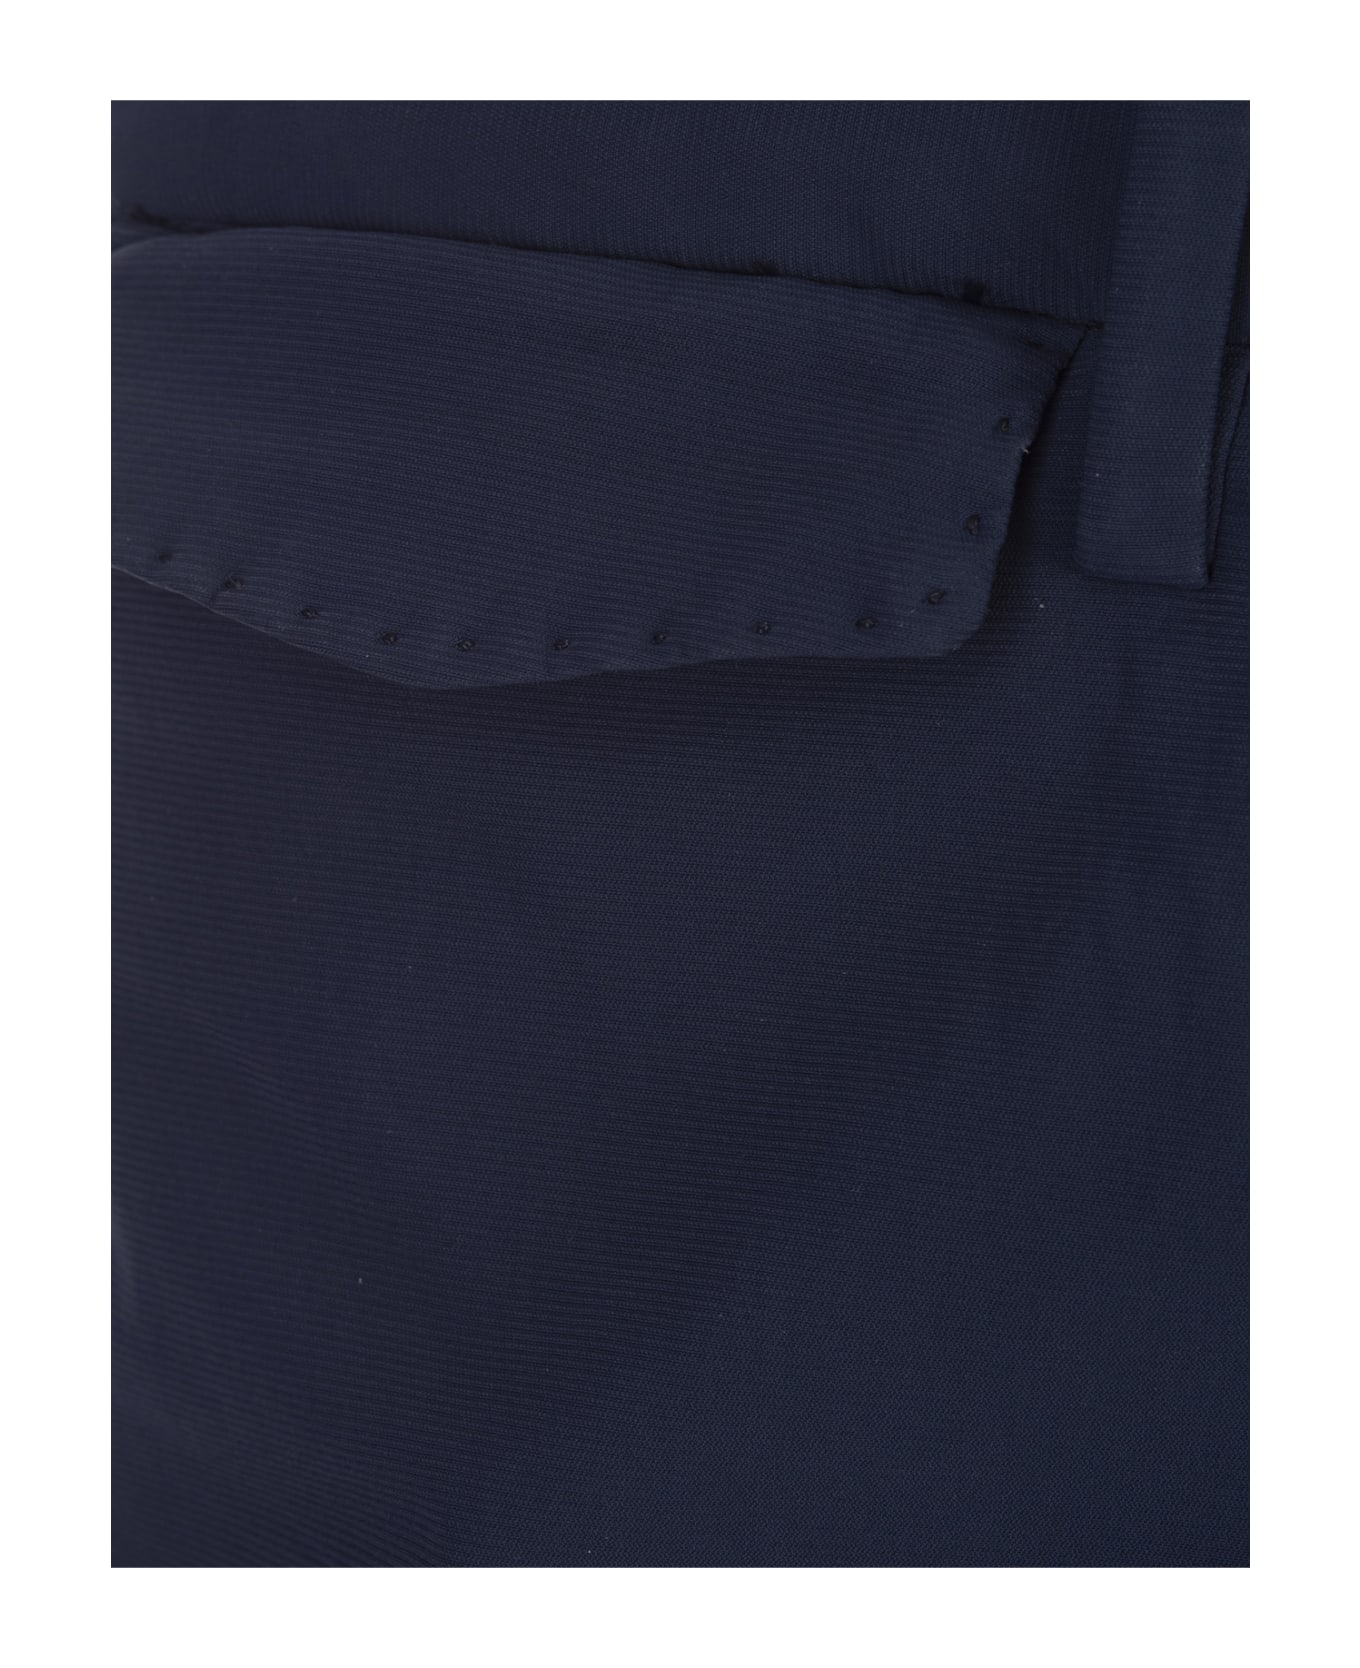 PT Bermuda Dark Blue Stretch Cotton Shorts - Blue ショートパンツ